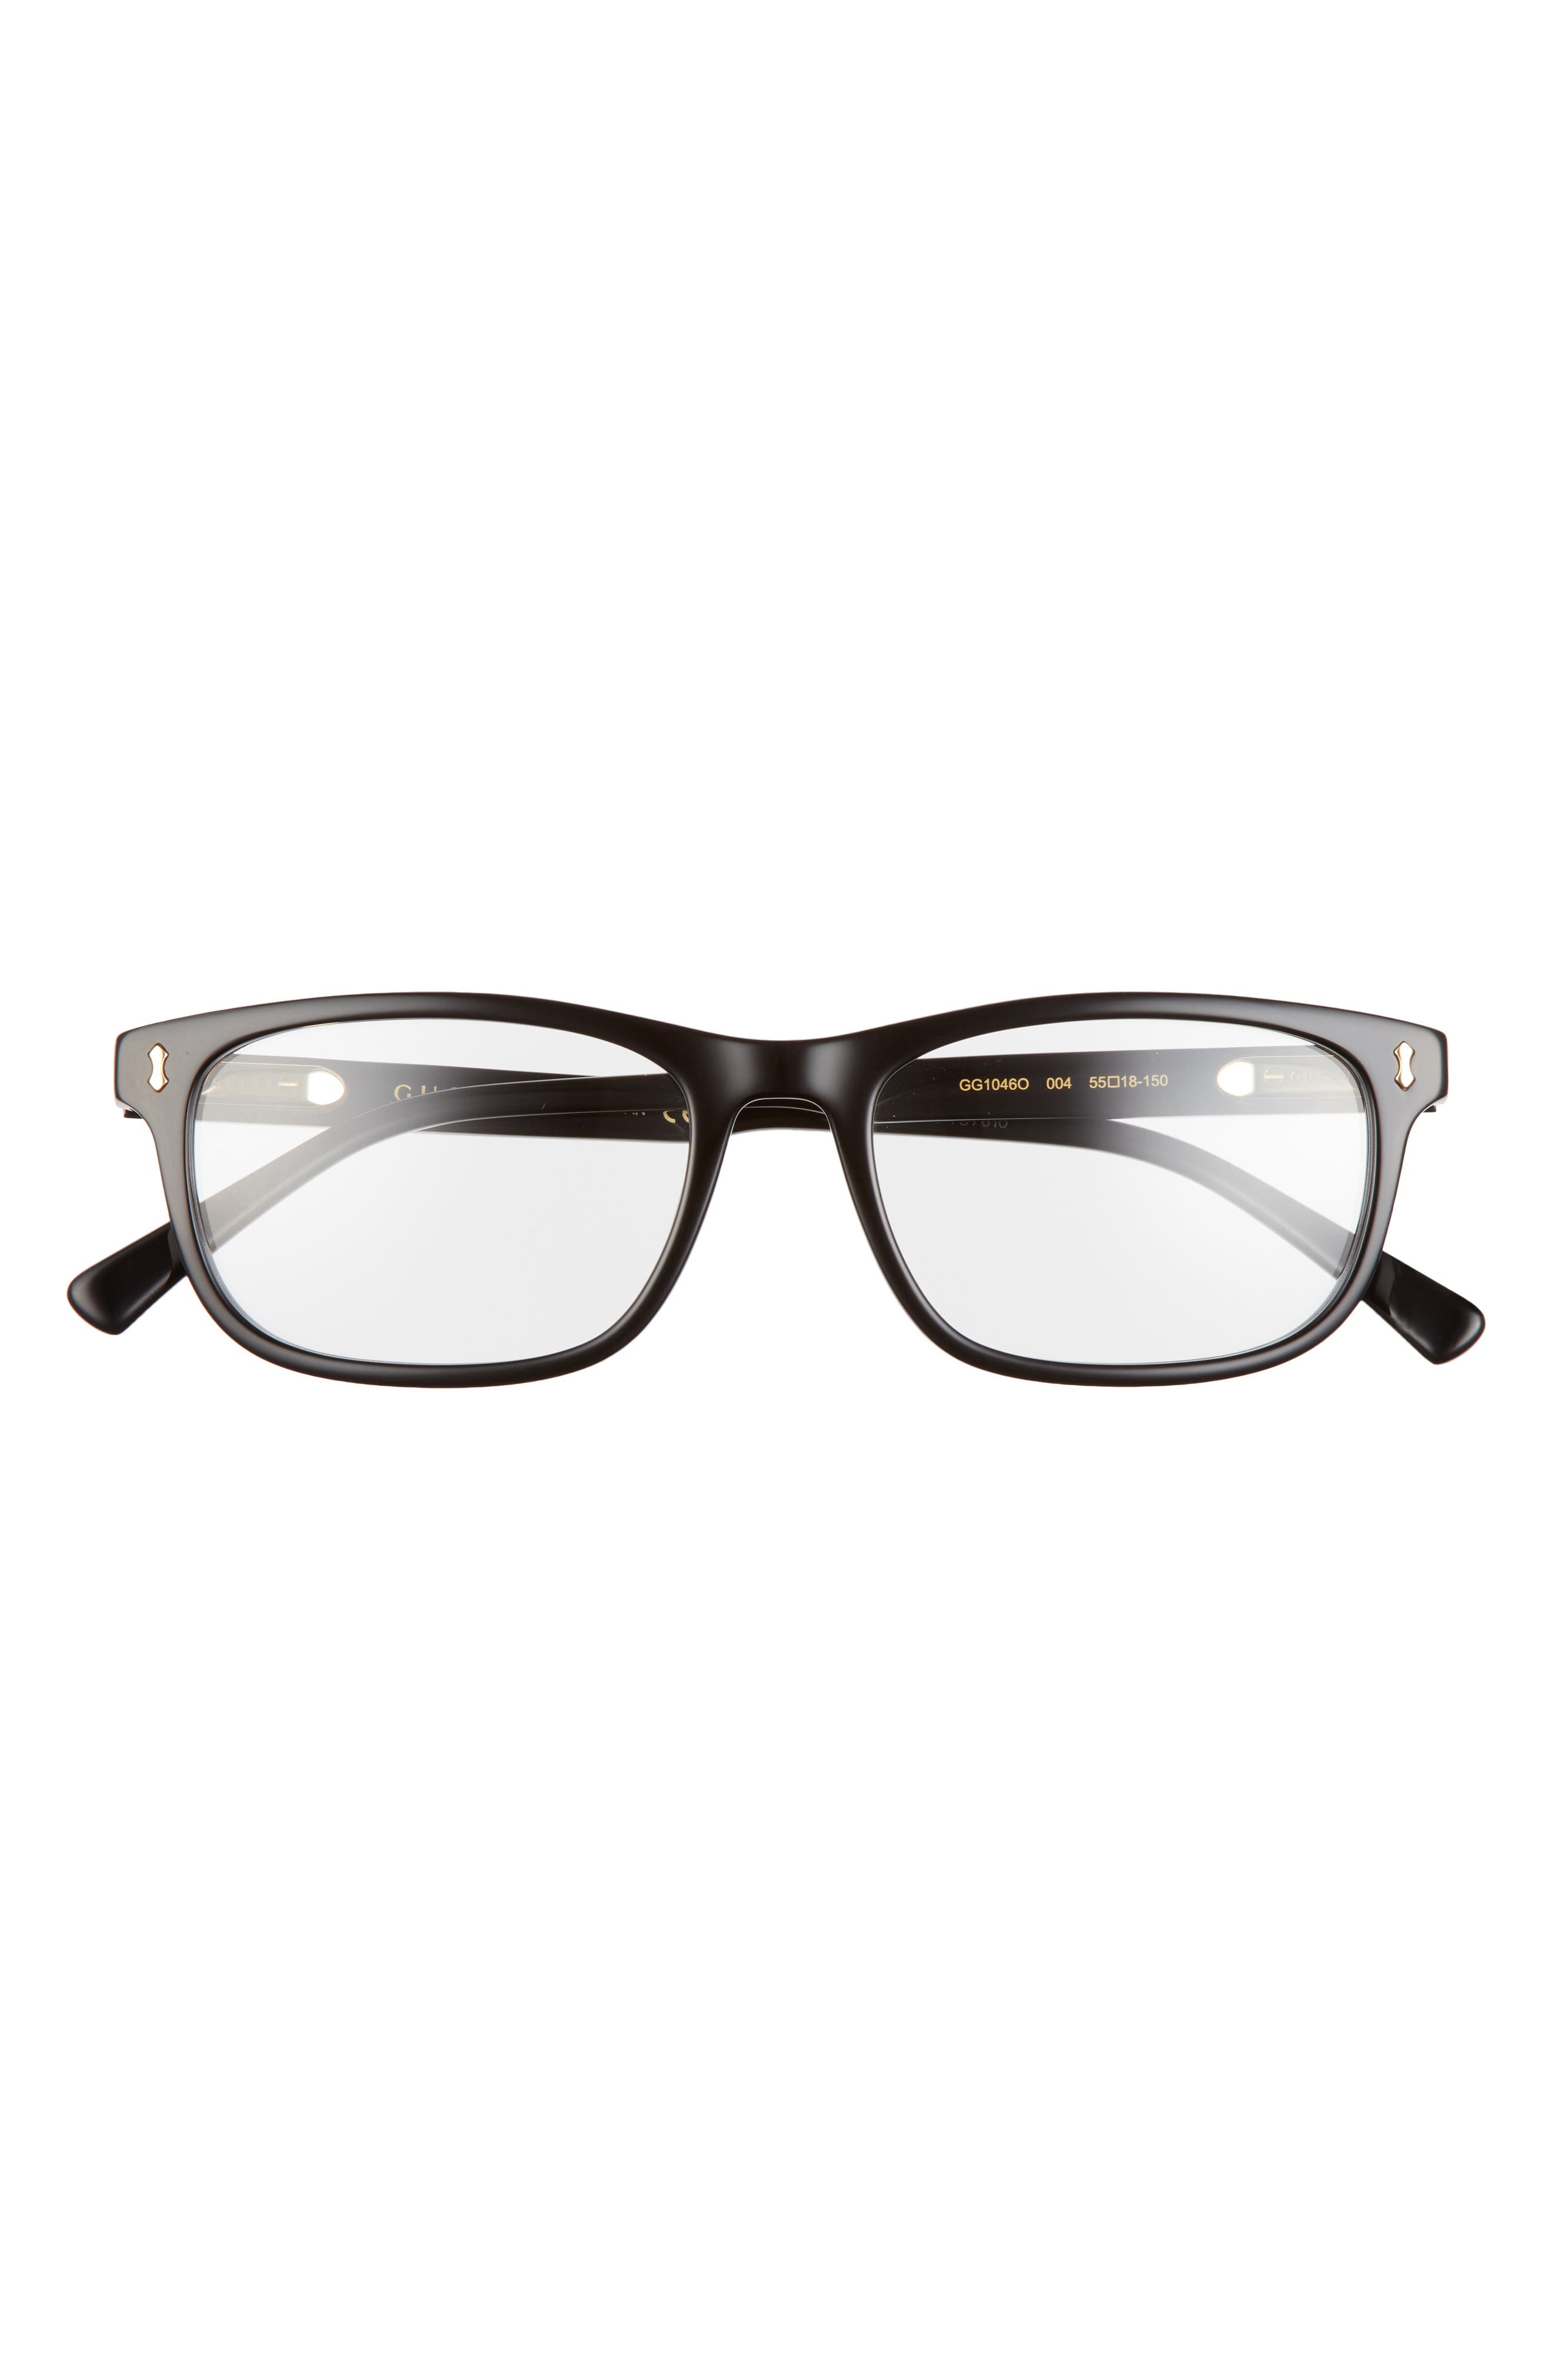 Gucci 55mm Rectangular Optical Glasses in Black at Nordstrom